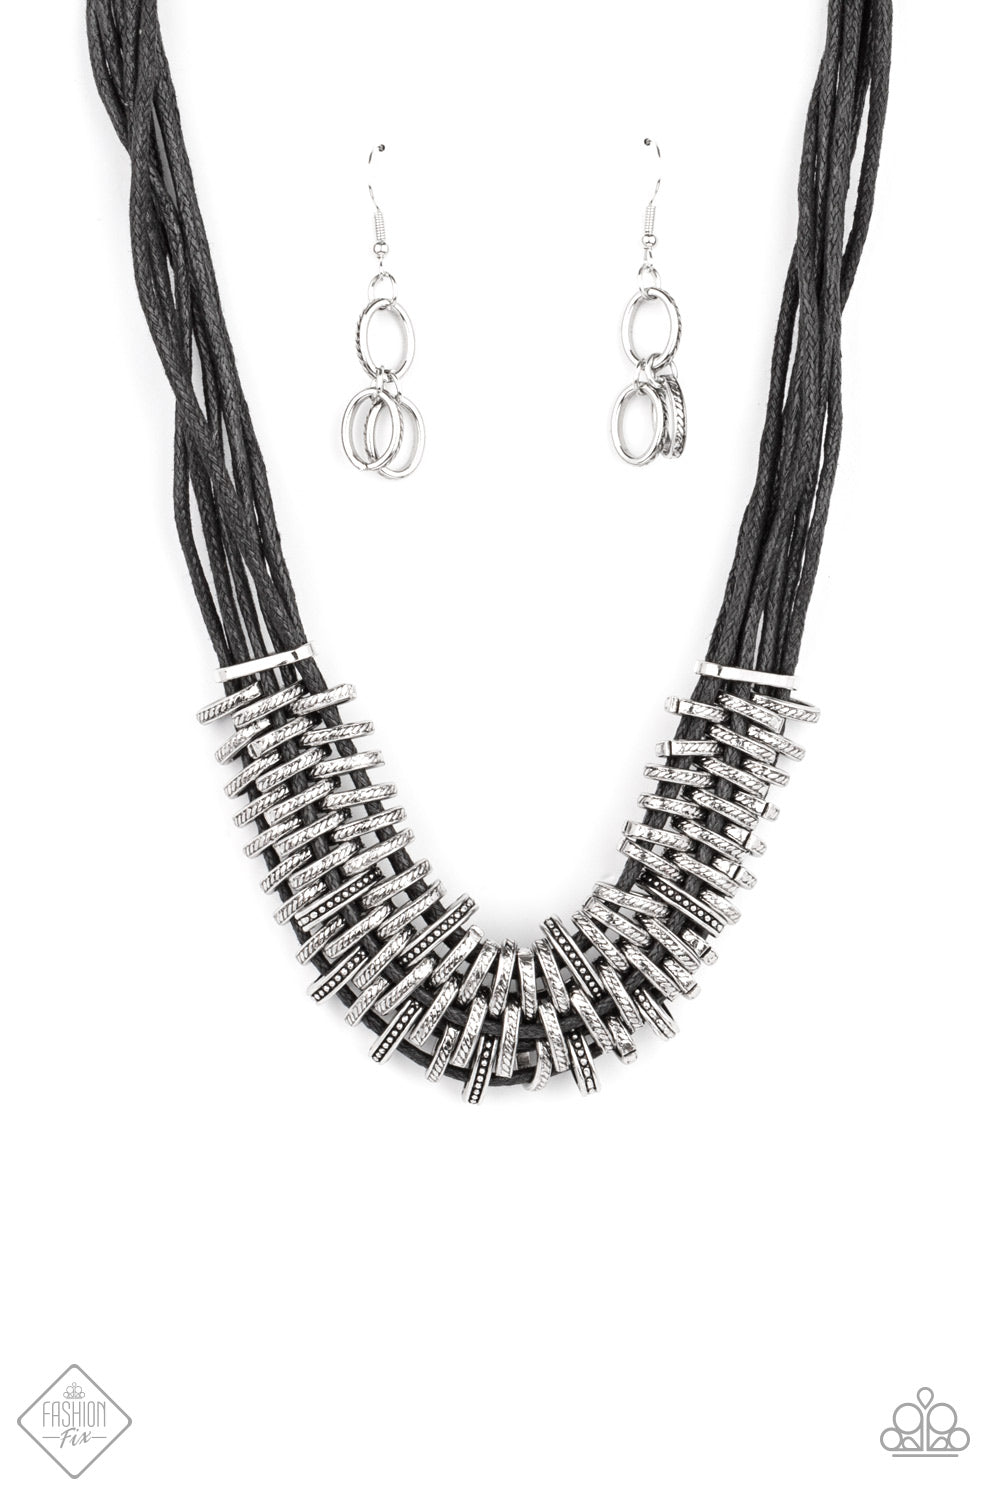 Lock, Stock, and SPARKLE - Black & Silver Necklace Set - Princess Glam Shop